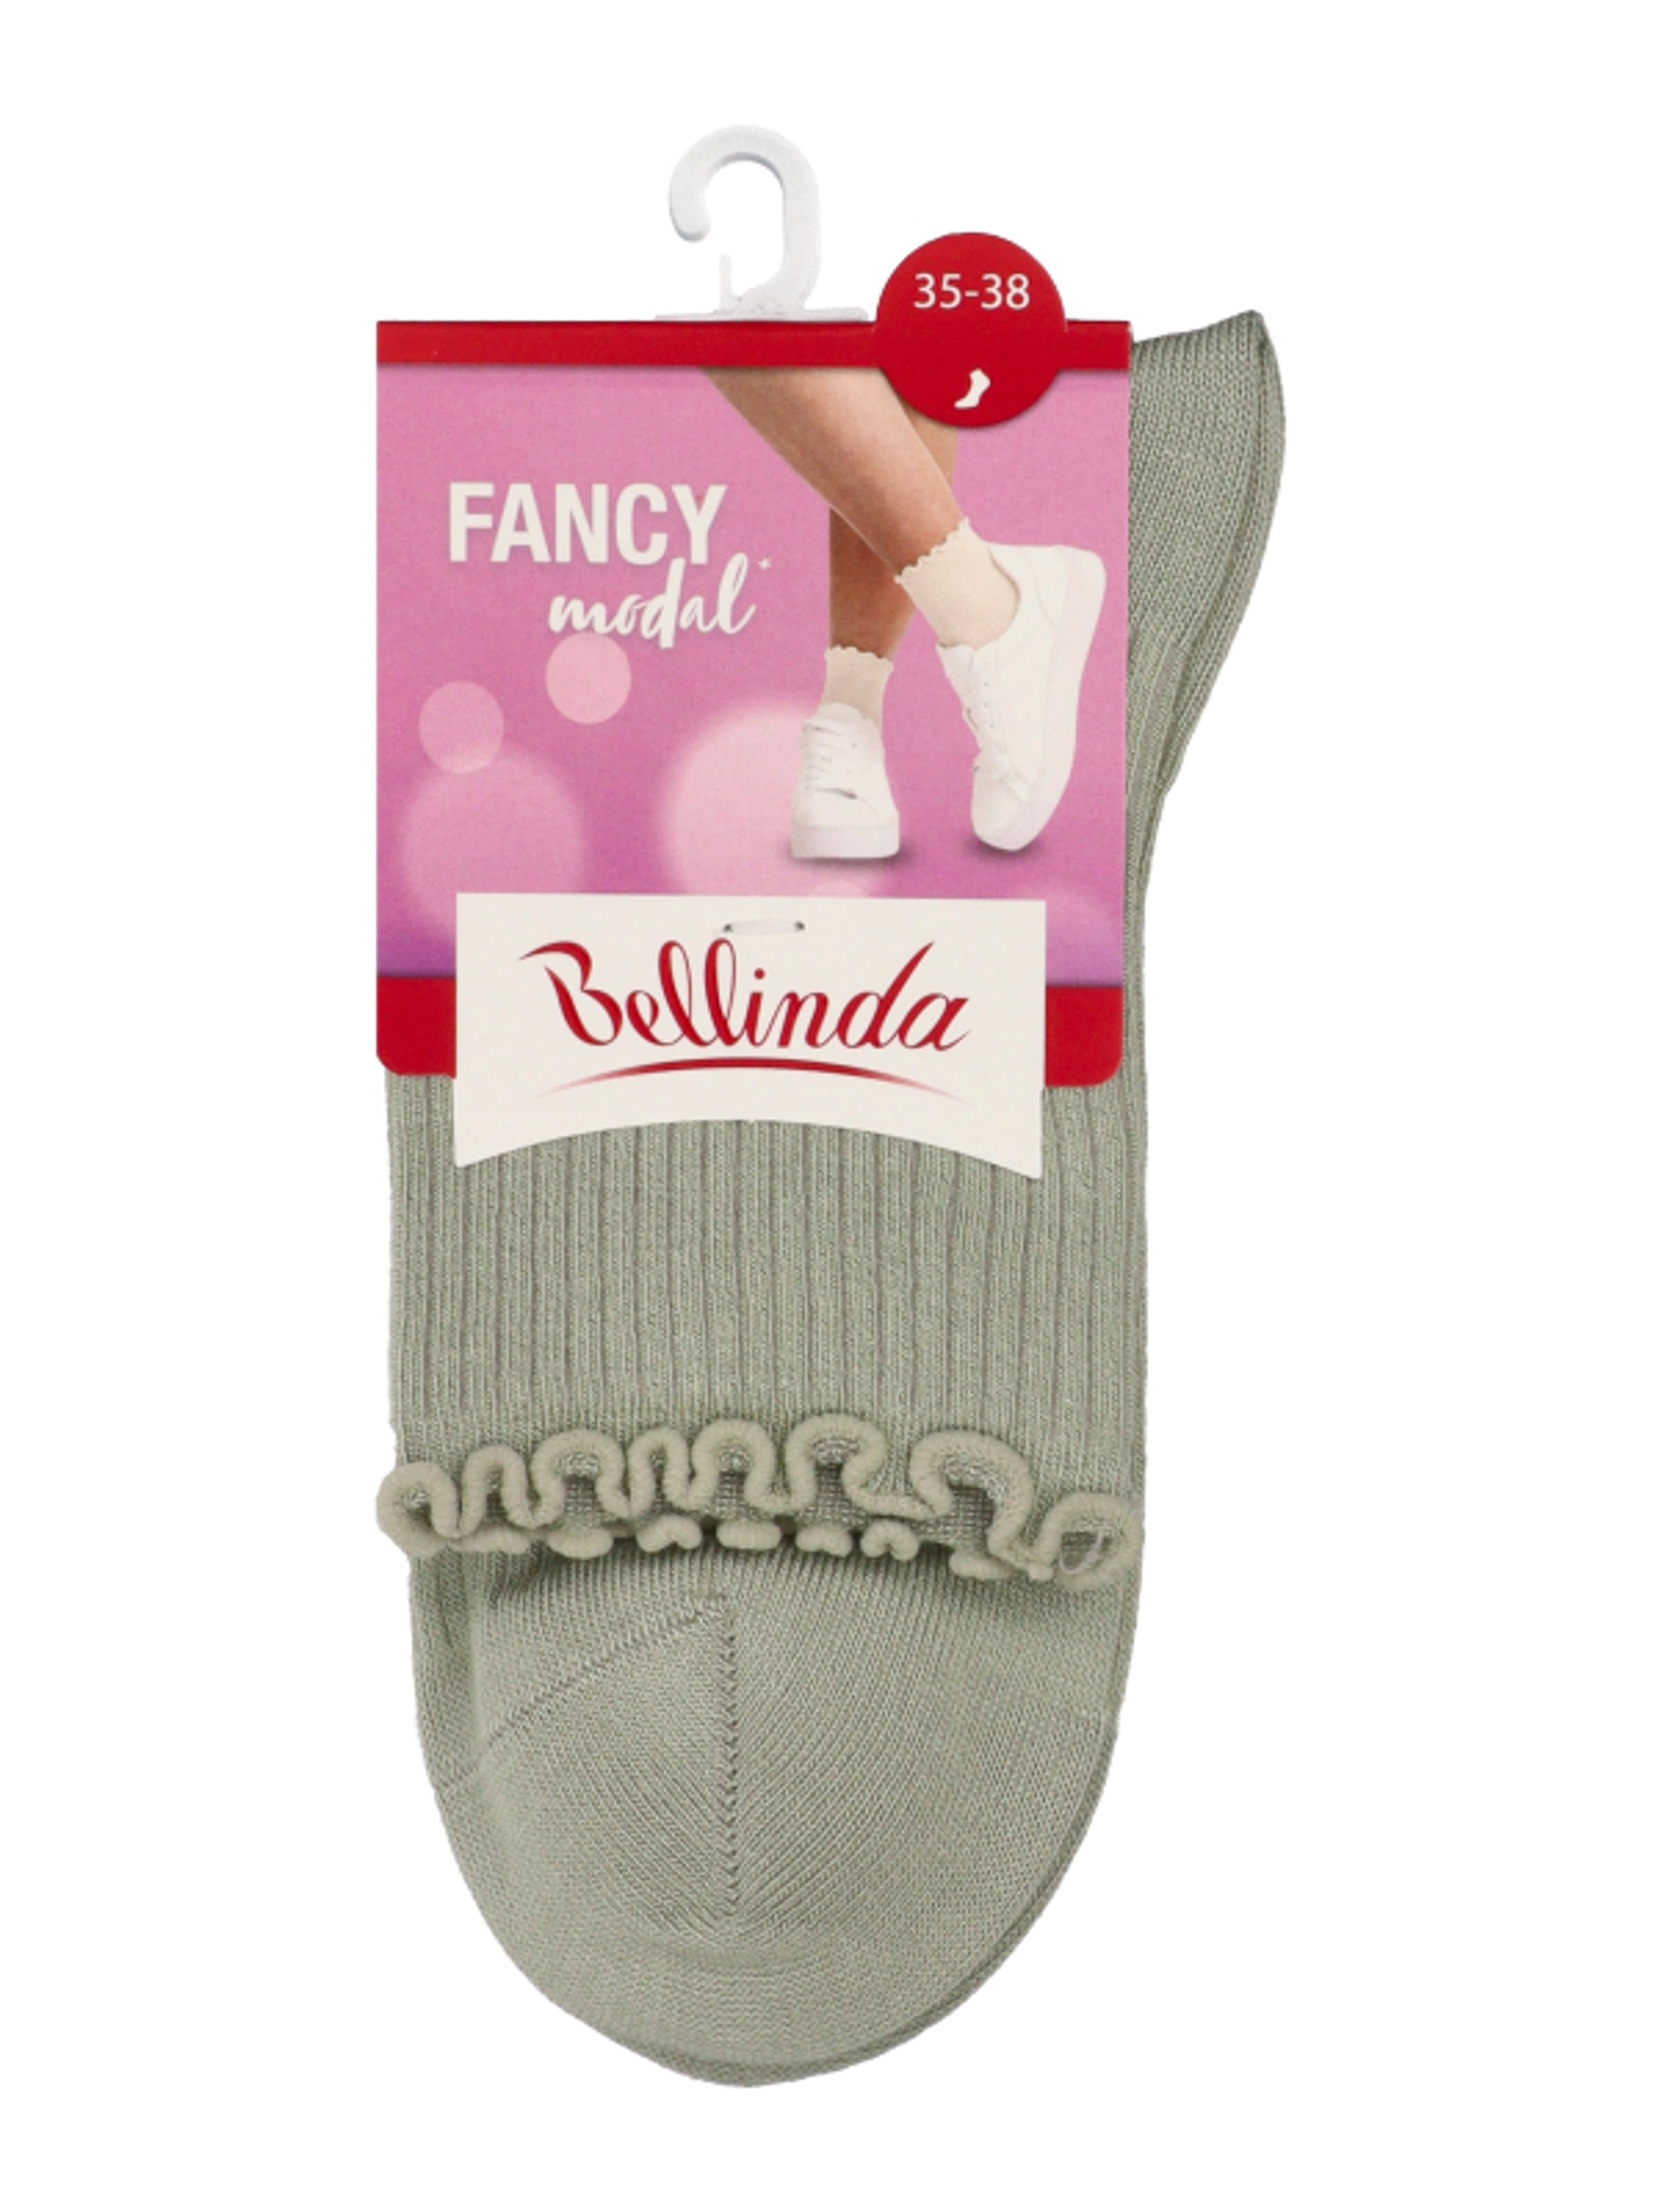 Bellinda Fancy Modal női zokni 35-38 /fashion - 1 db-1